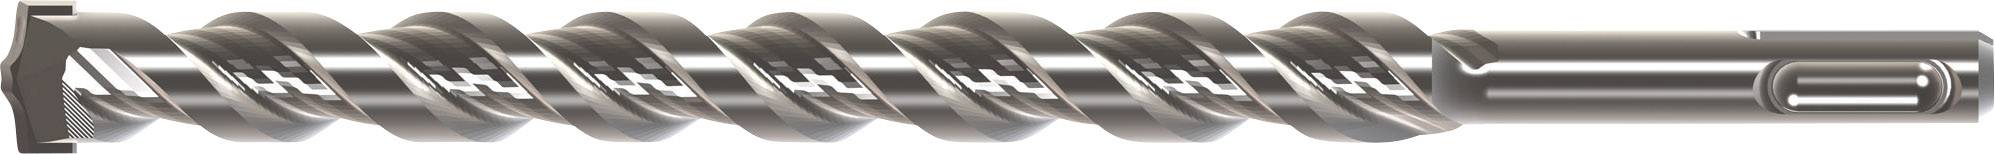 HELLER Hartmetall Hammerbohrer 14 mm Heller Bionic 163163 Gesamtlänge 300 mm SDS-Plus 1 St.